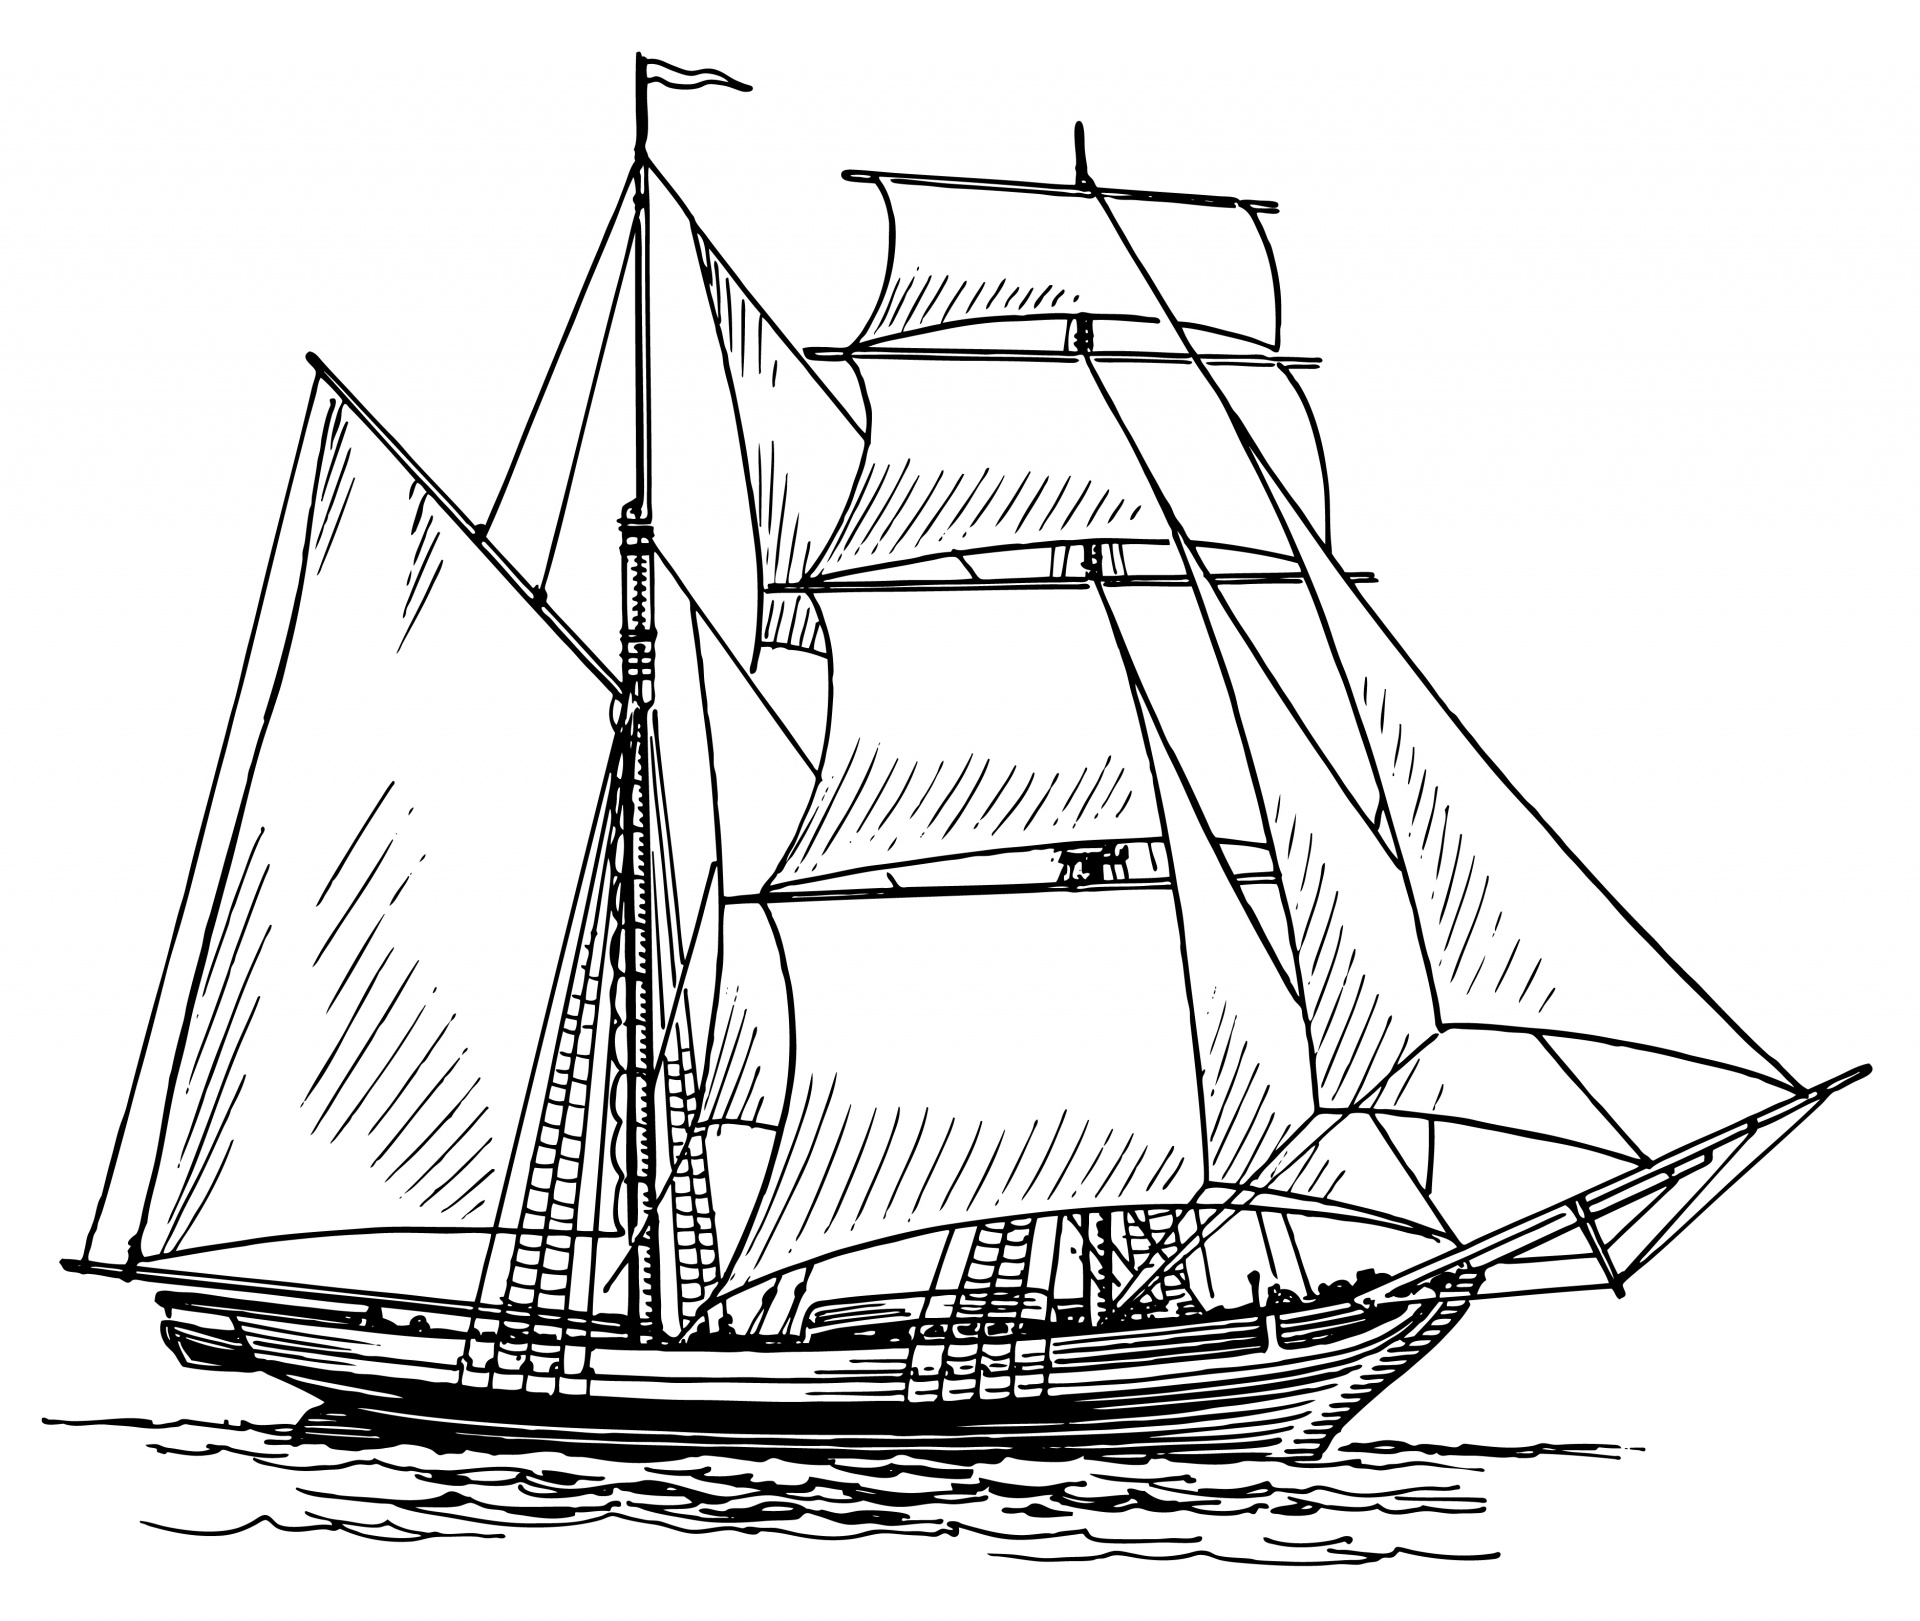 Line art illustration of a sailing ship clipart